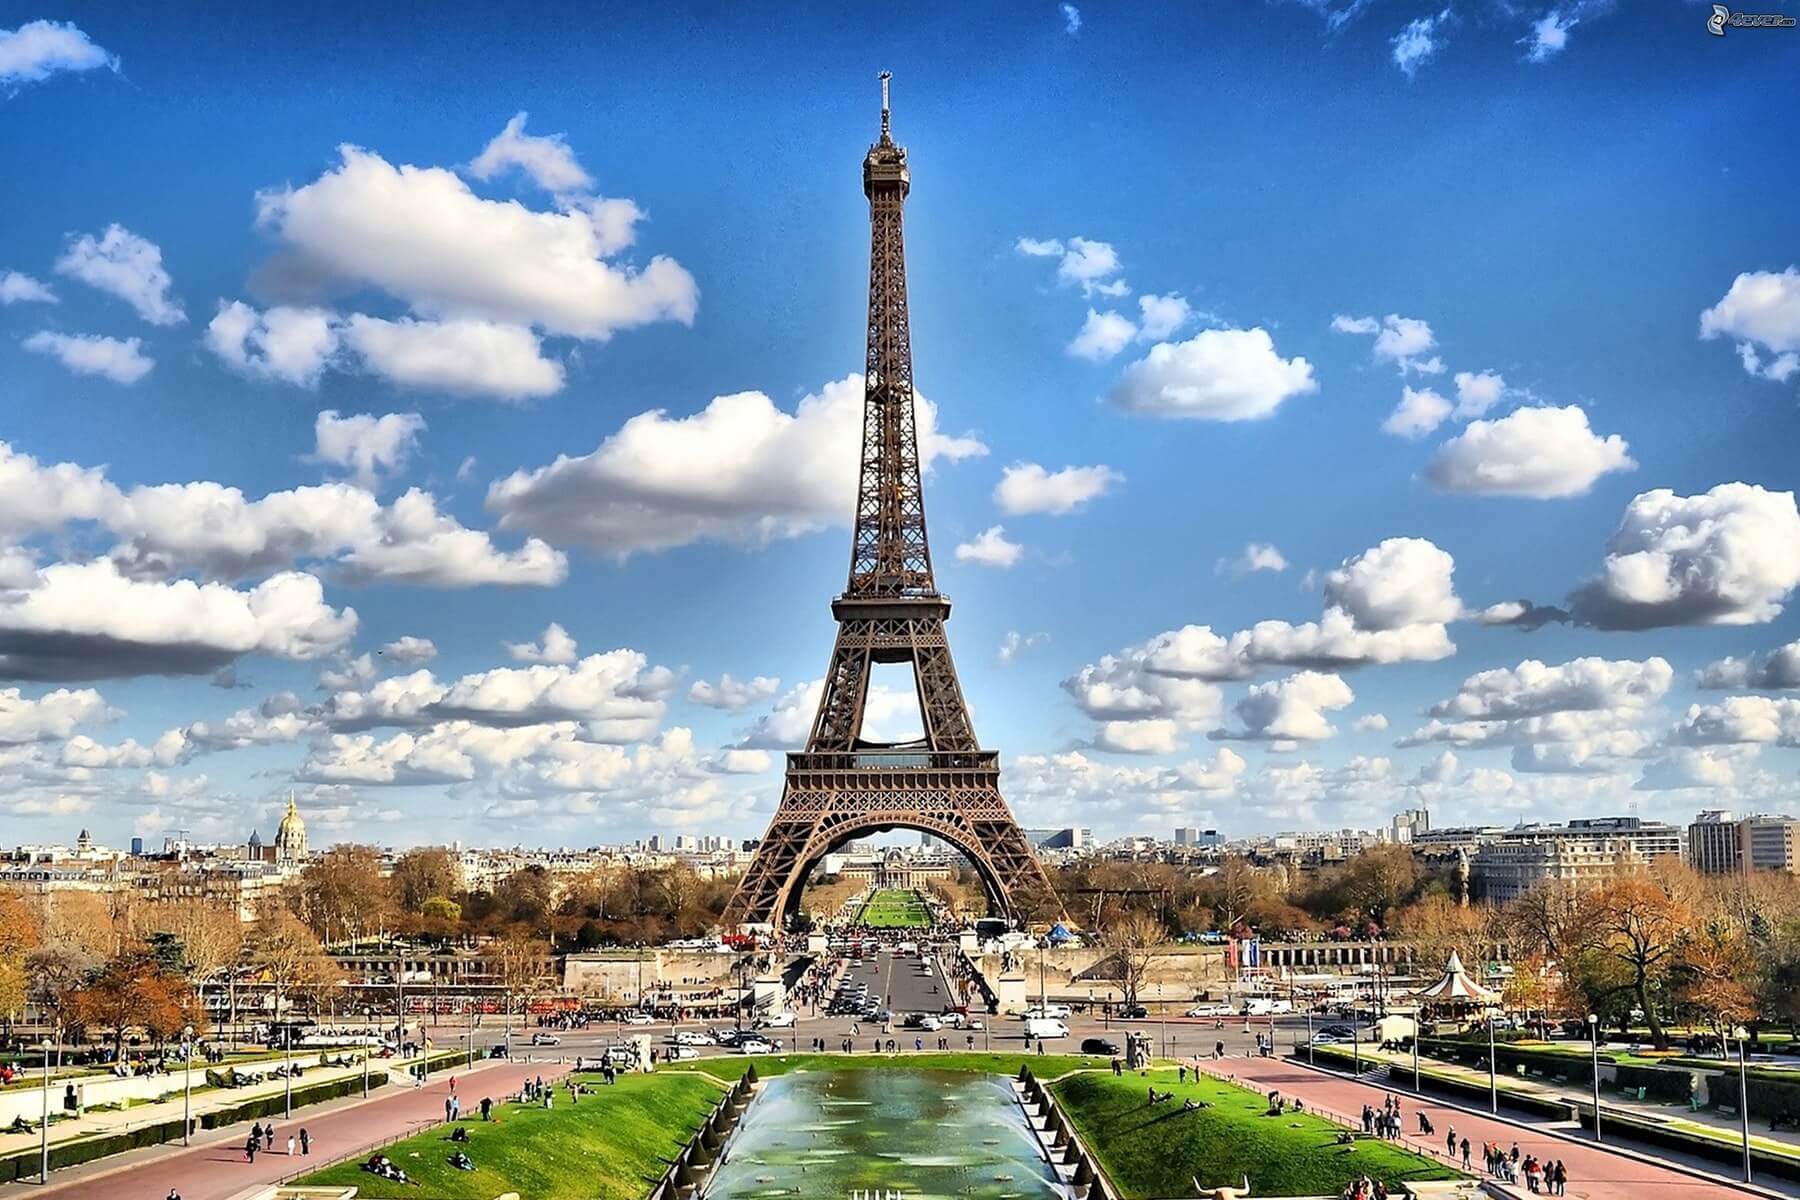 The Beautiful Eiffel Tower